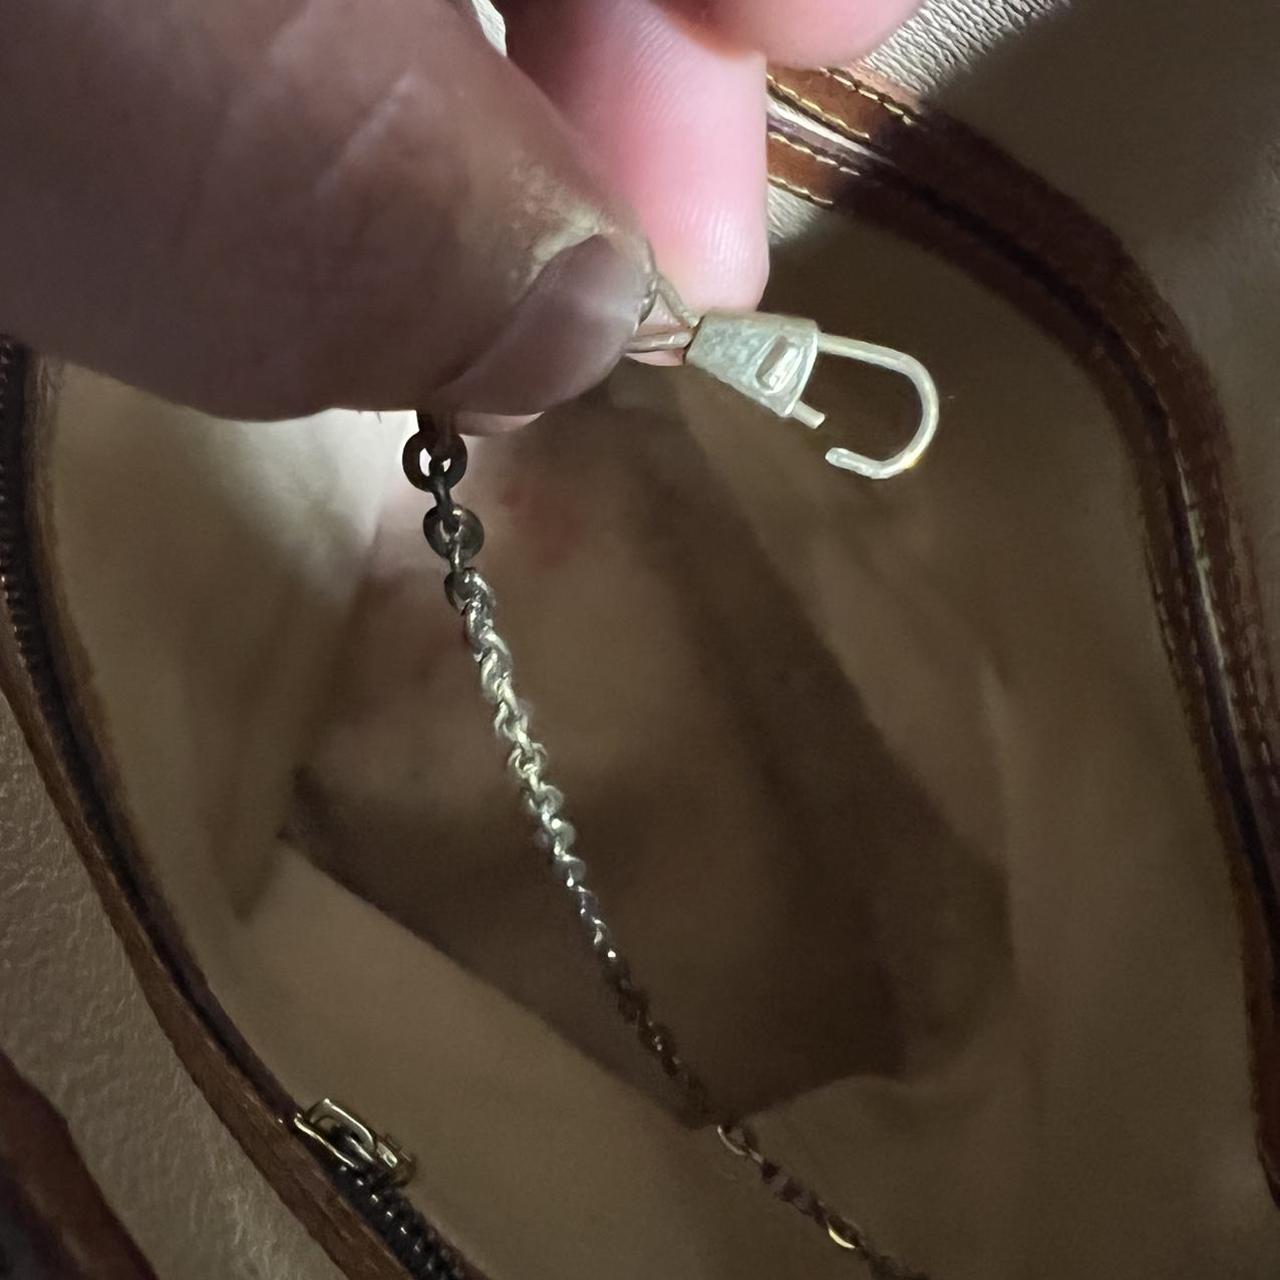 Louis Vuitton 2001 bucket bag !CHECK FOR MORE INFO - Depop